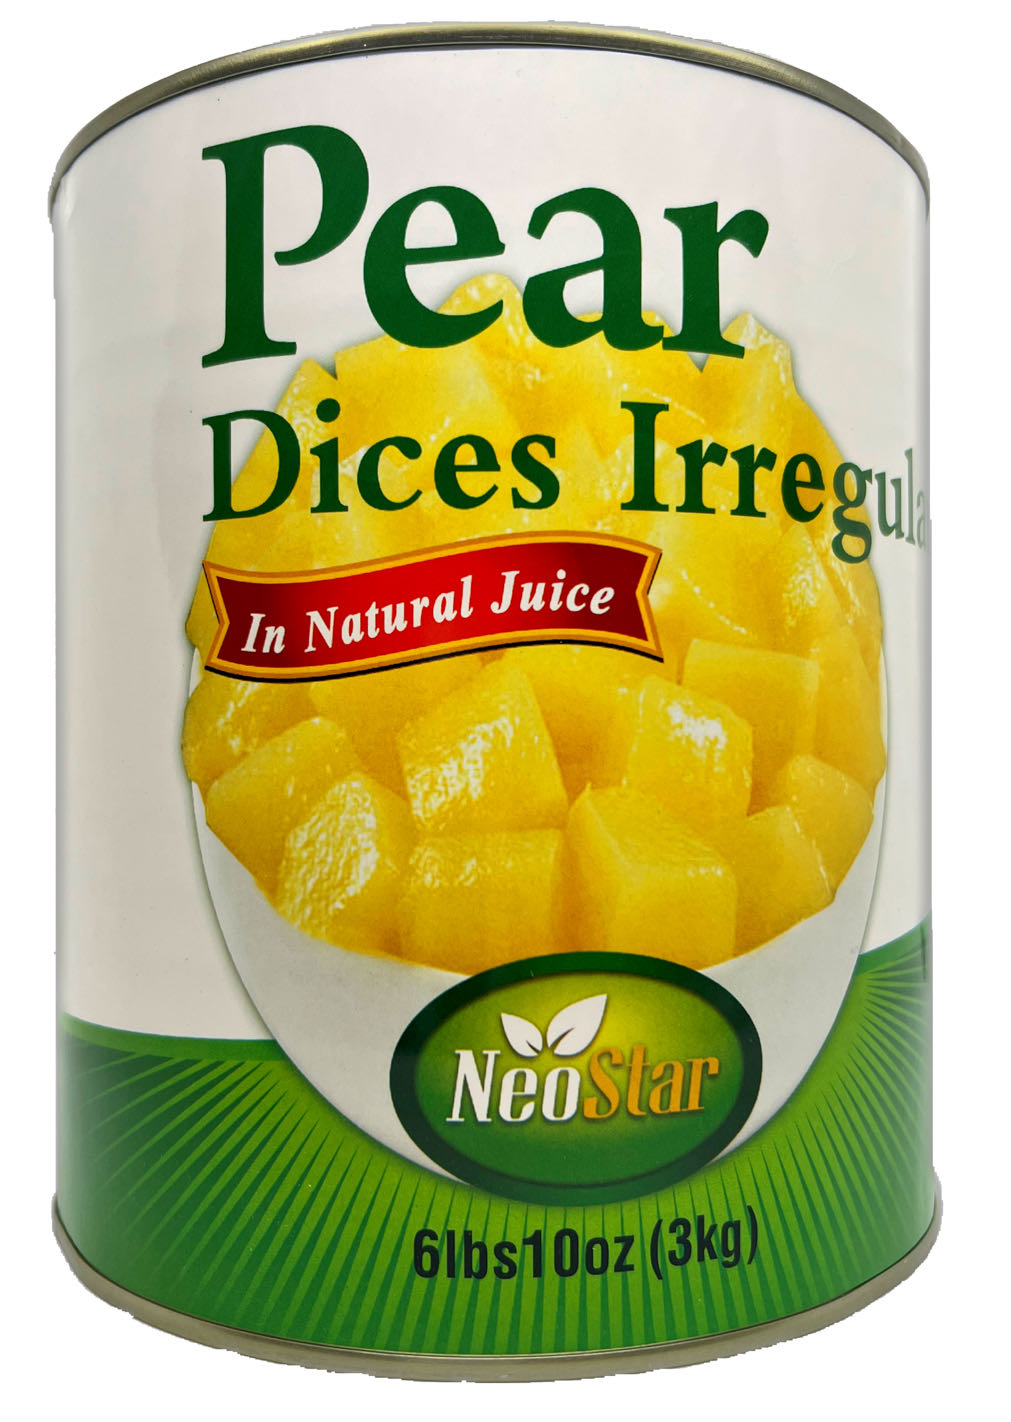 #10 (106oz) Pear Dices, Irregular, Light Syrup